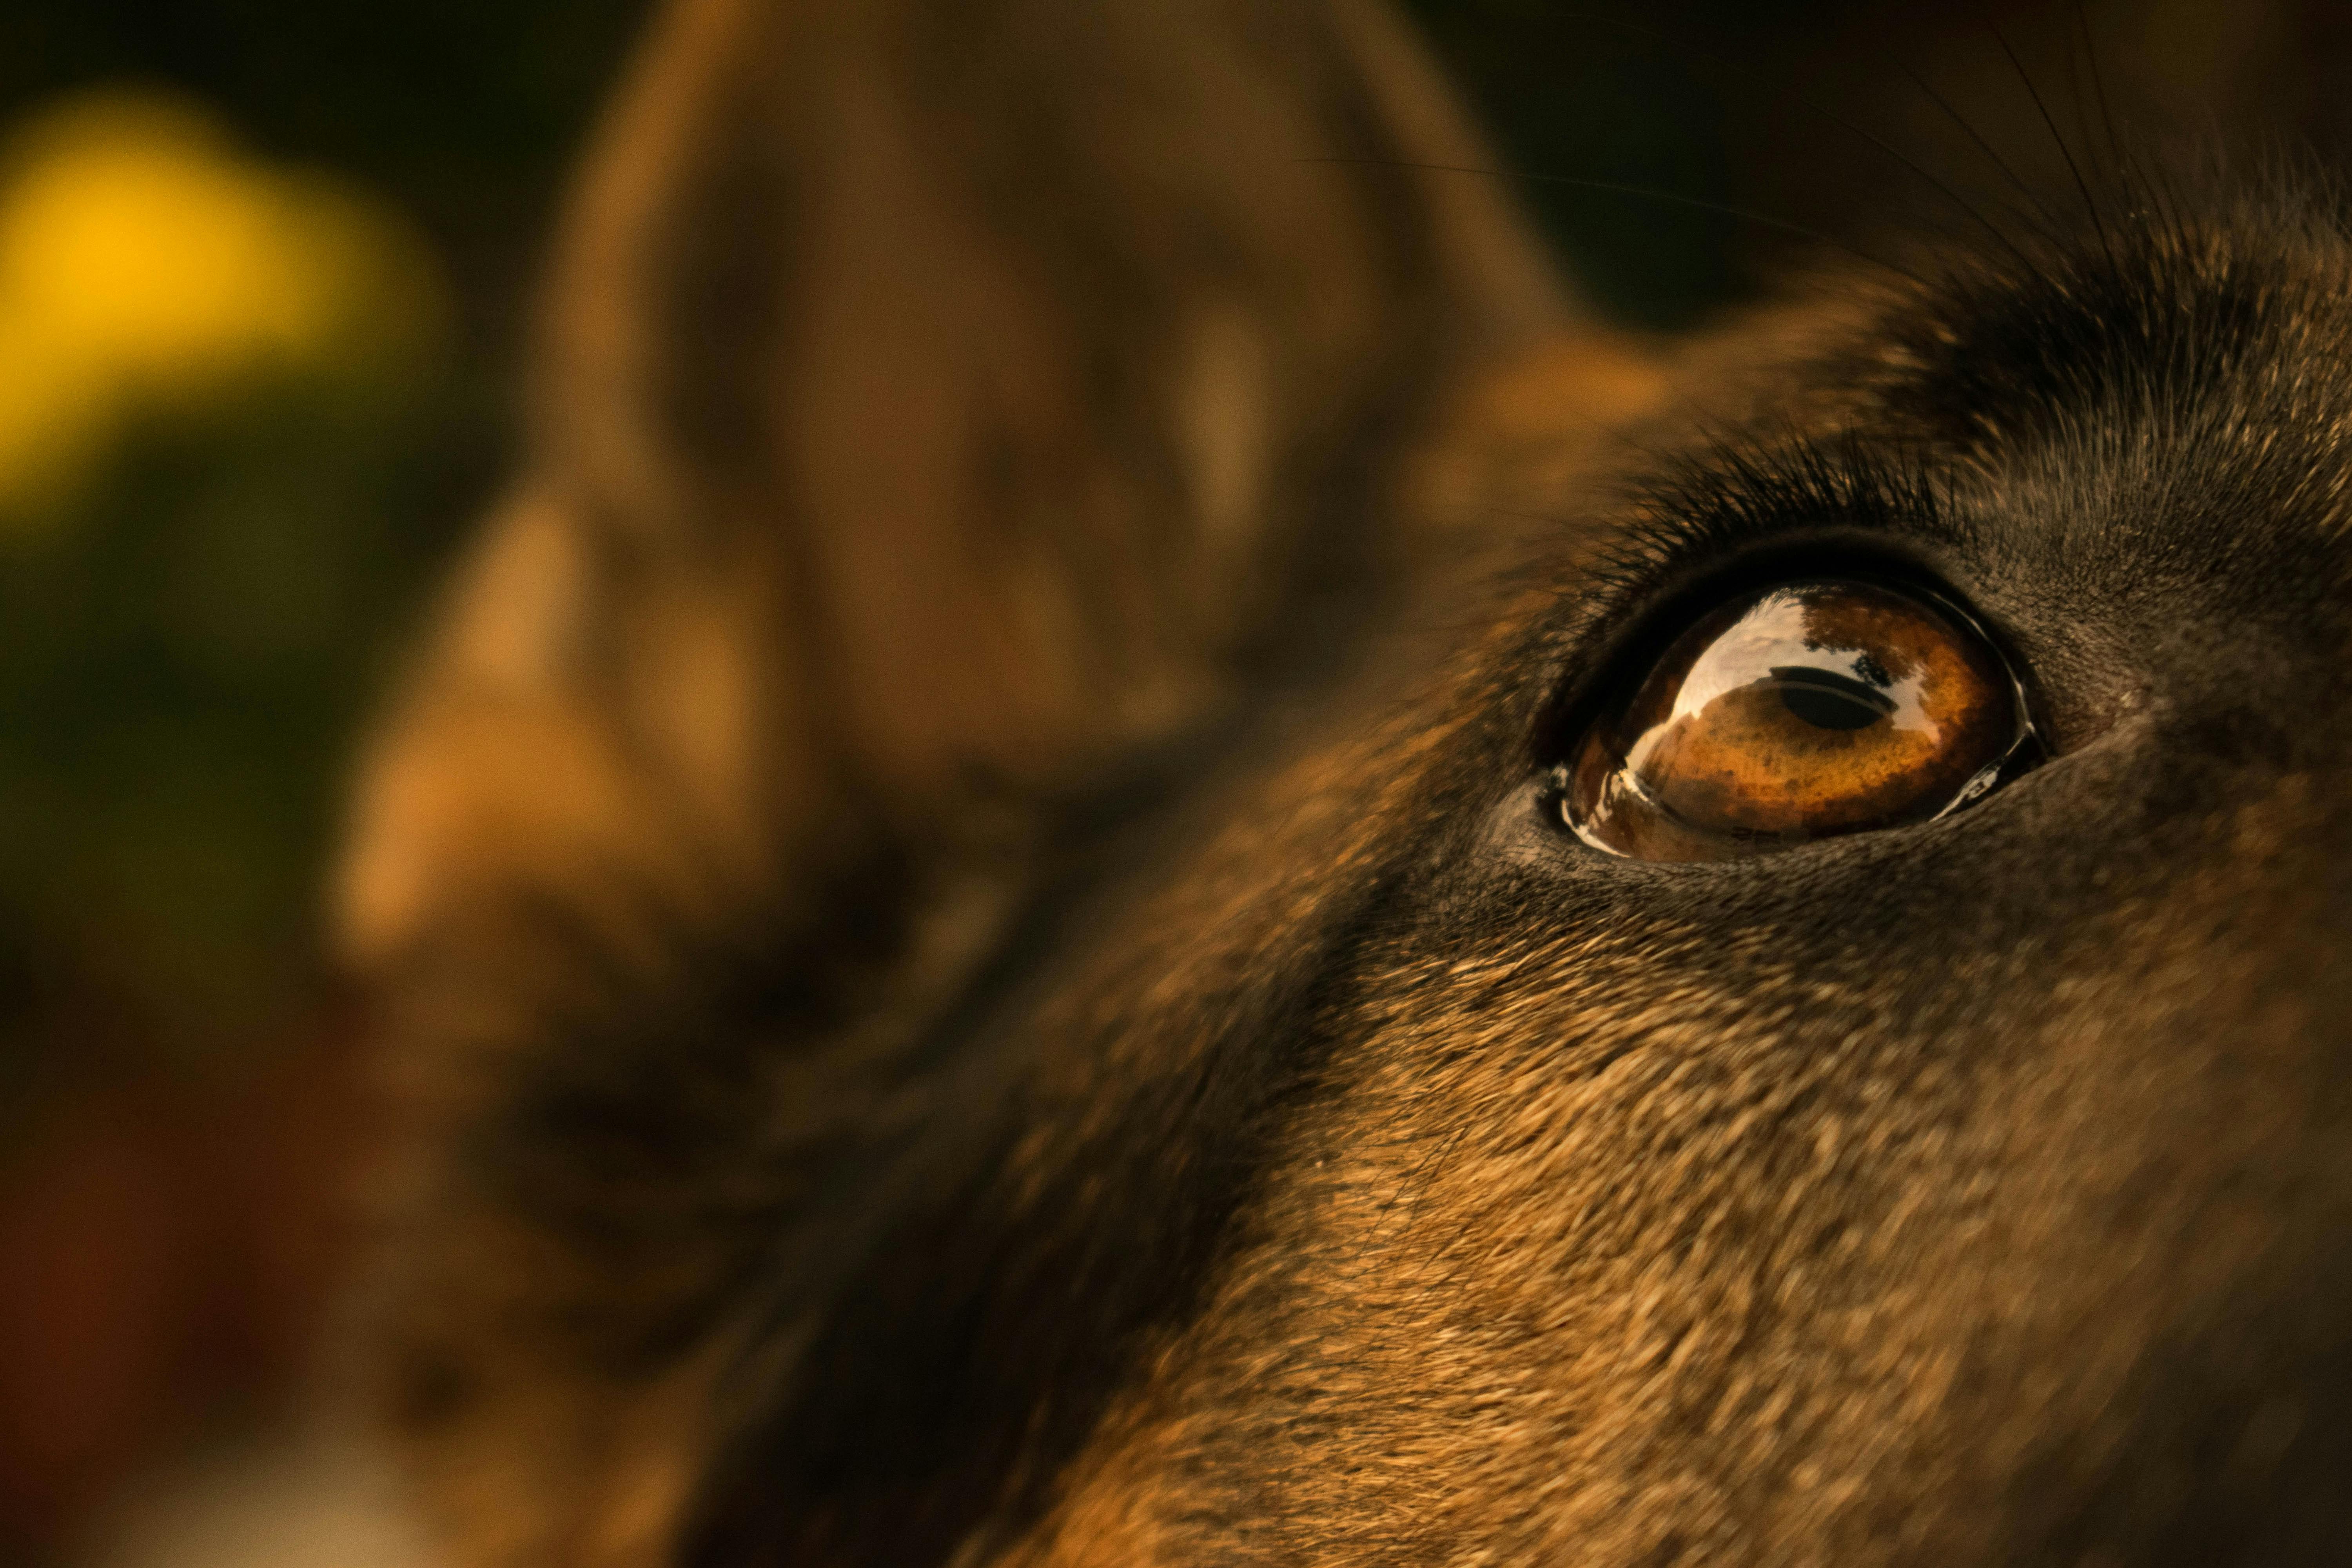 Close-up of a dog's eye.